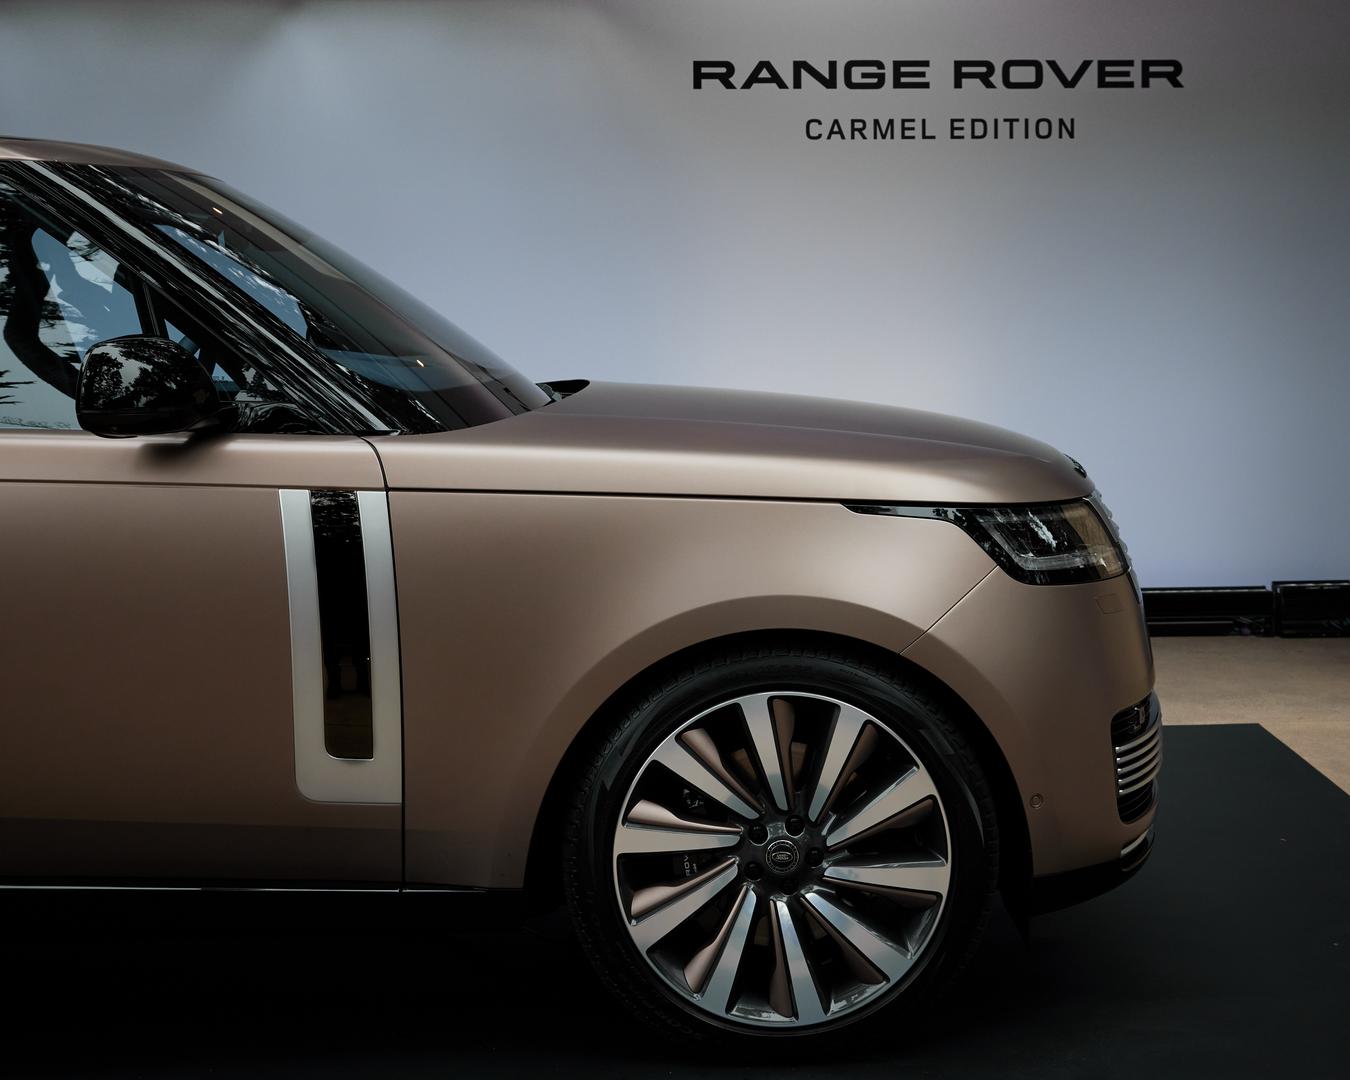 Range Rover SV Camel Edition wheels